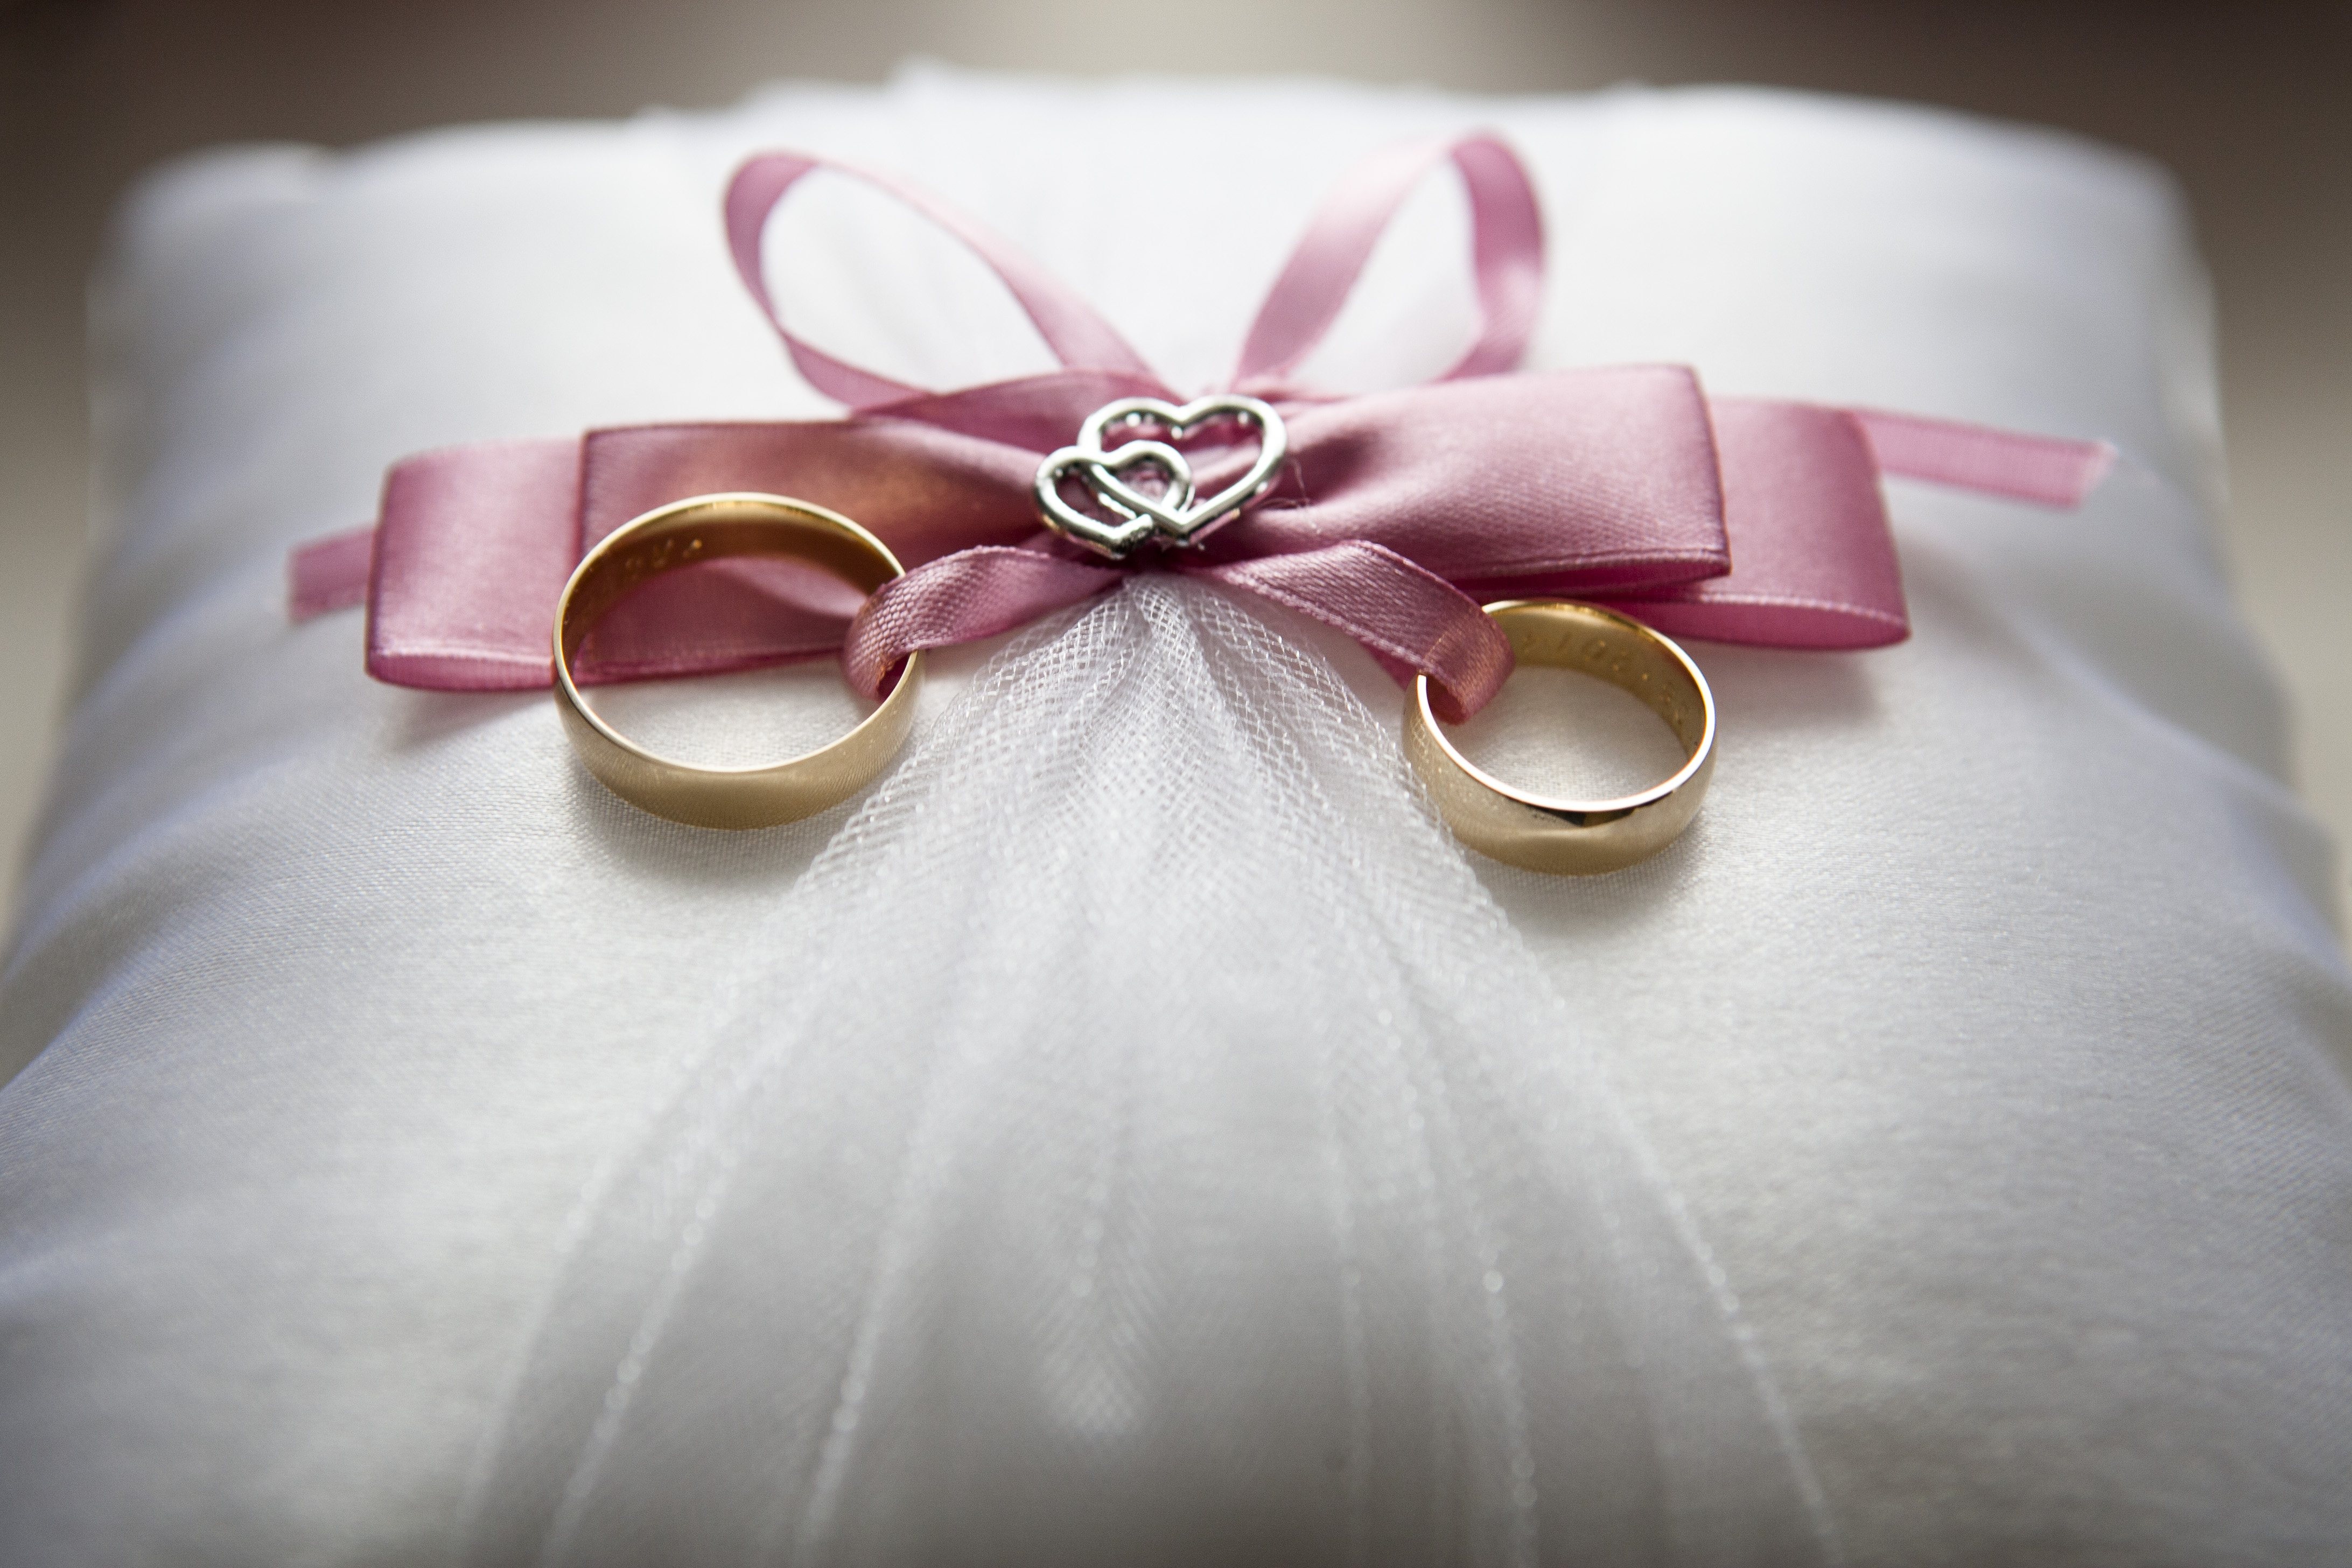 Most Popular Wedding Ceremony Songs | Wedding Pixie Blog | Wedding ...